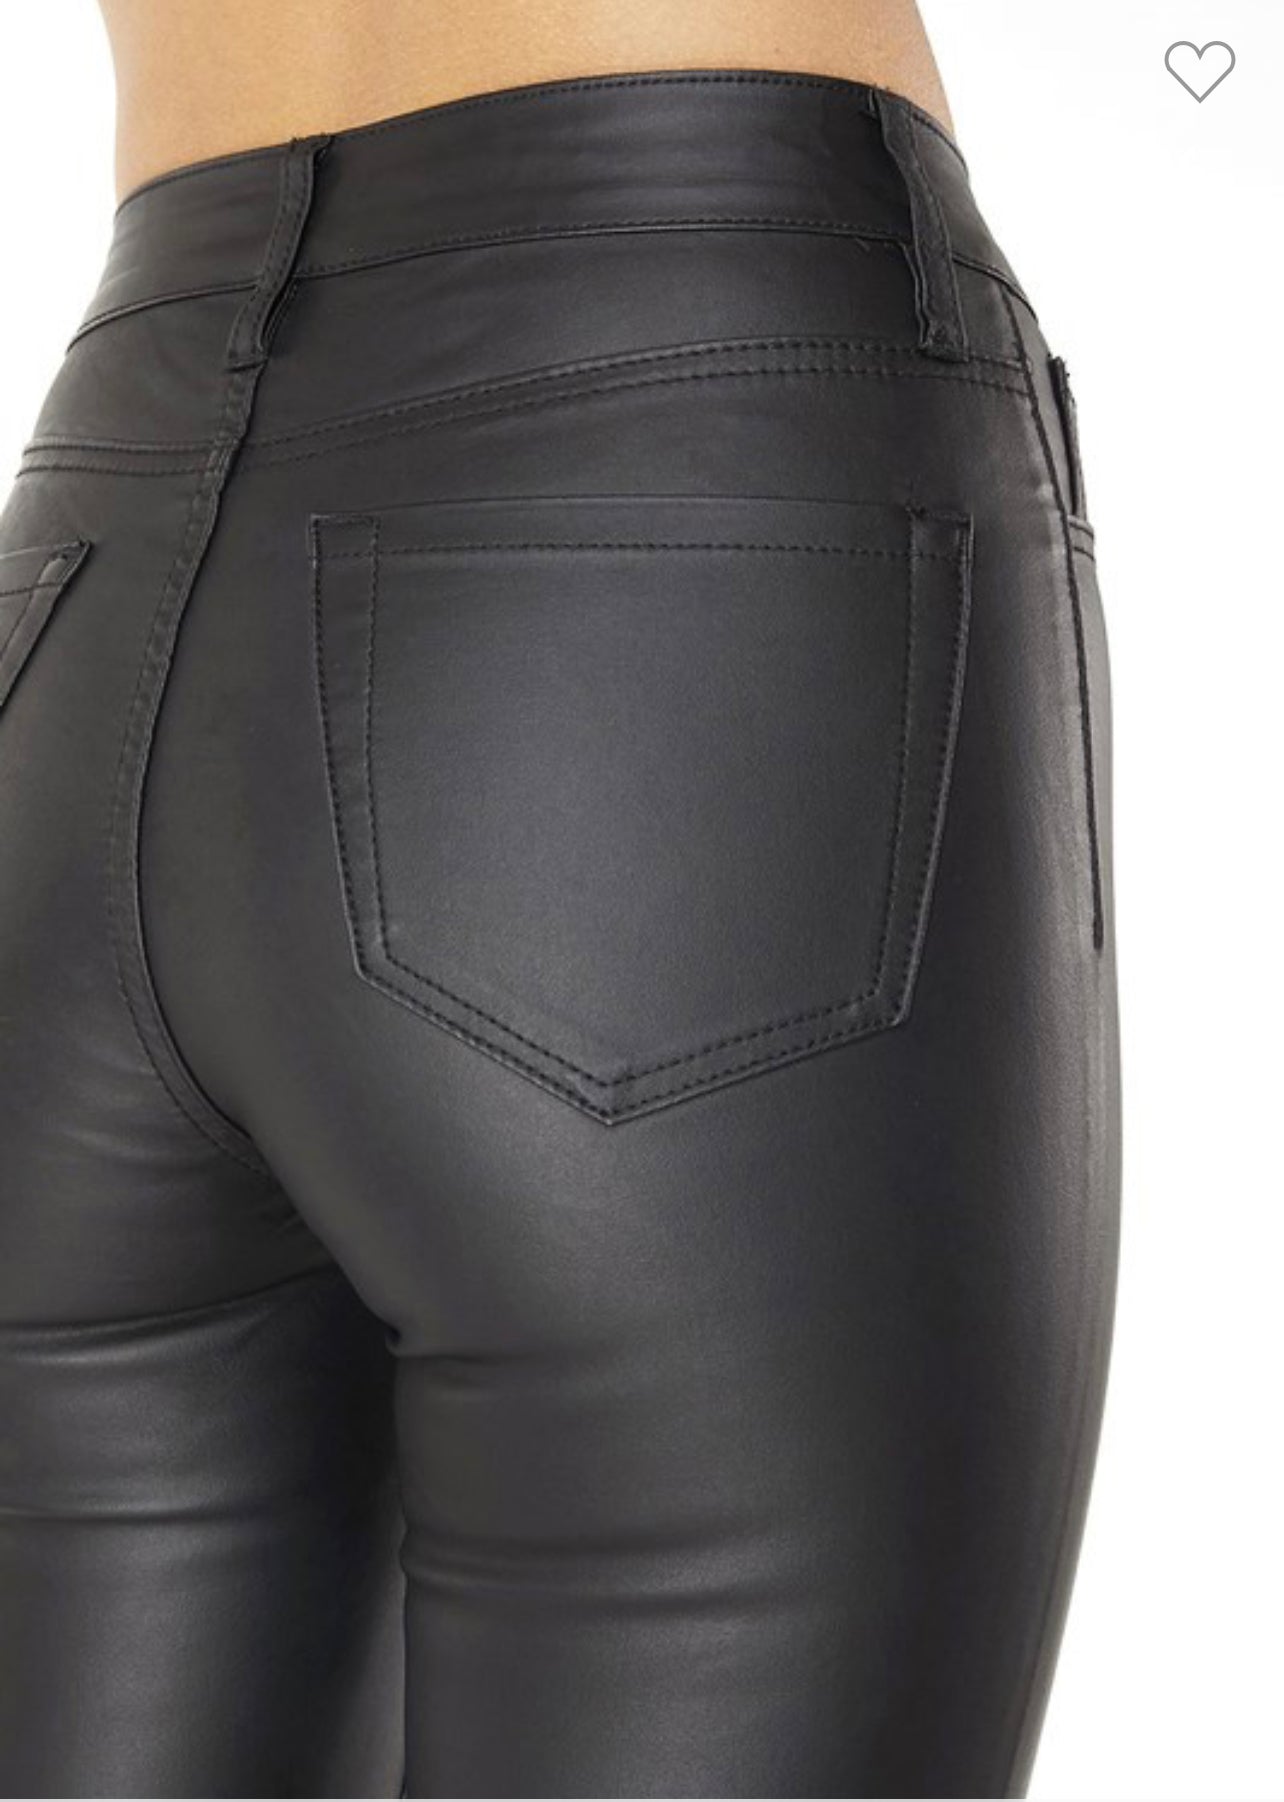 Bad Girl Black Leather Pants